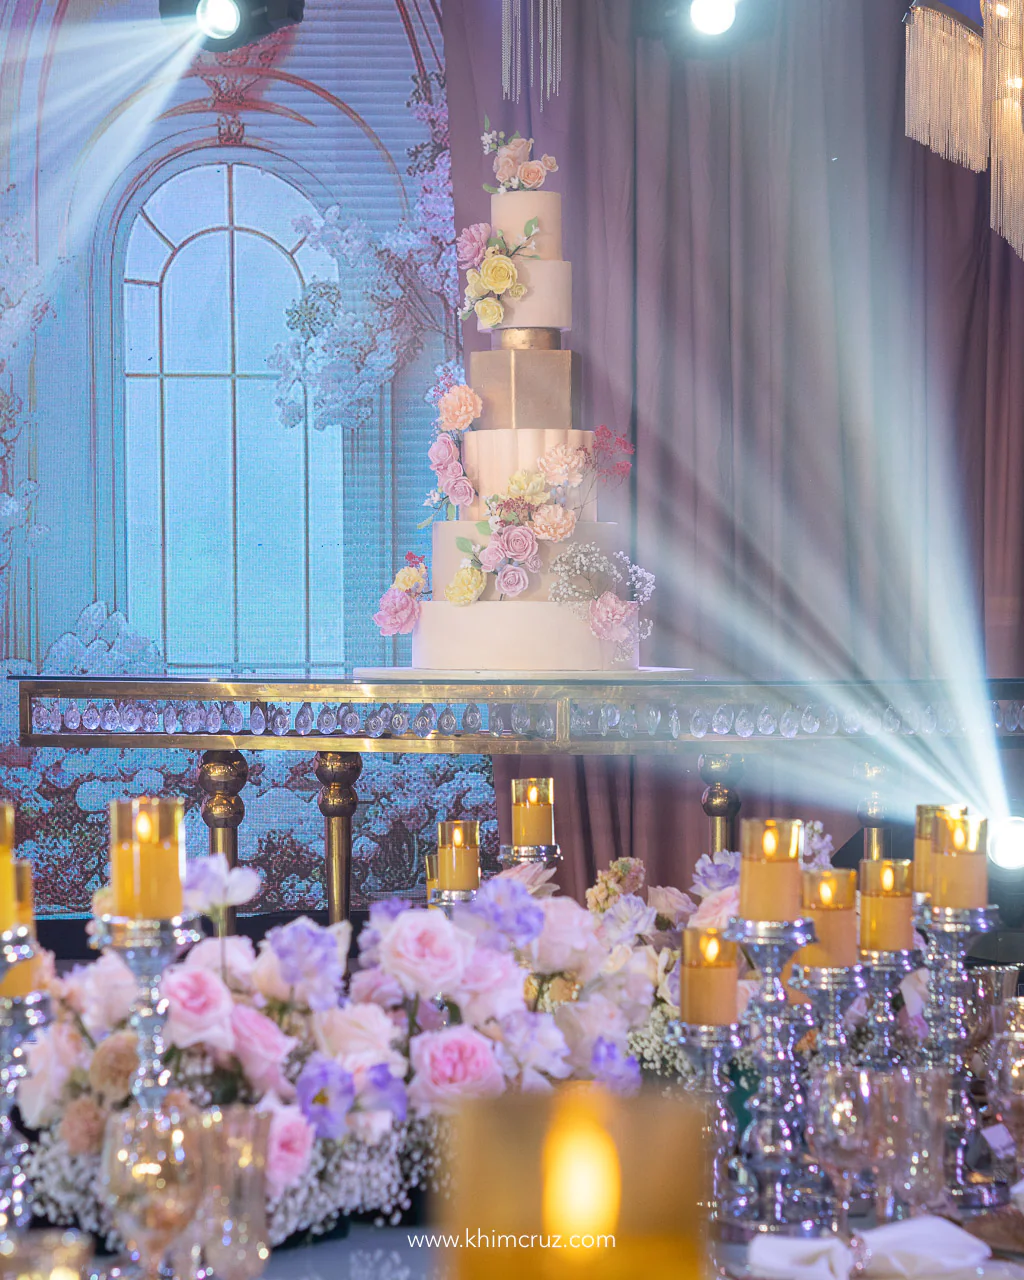 beautiful cake at a dreamy floral garden wedding reception